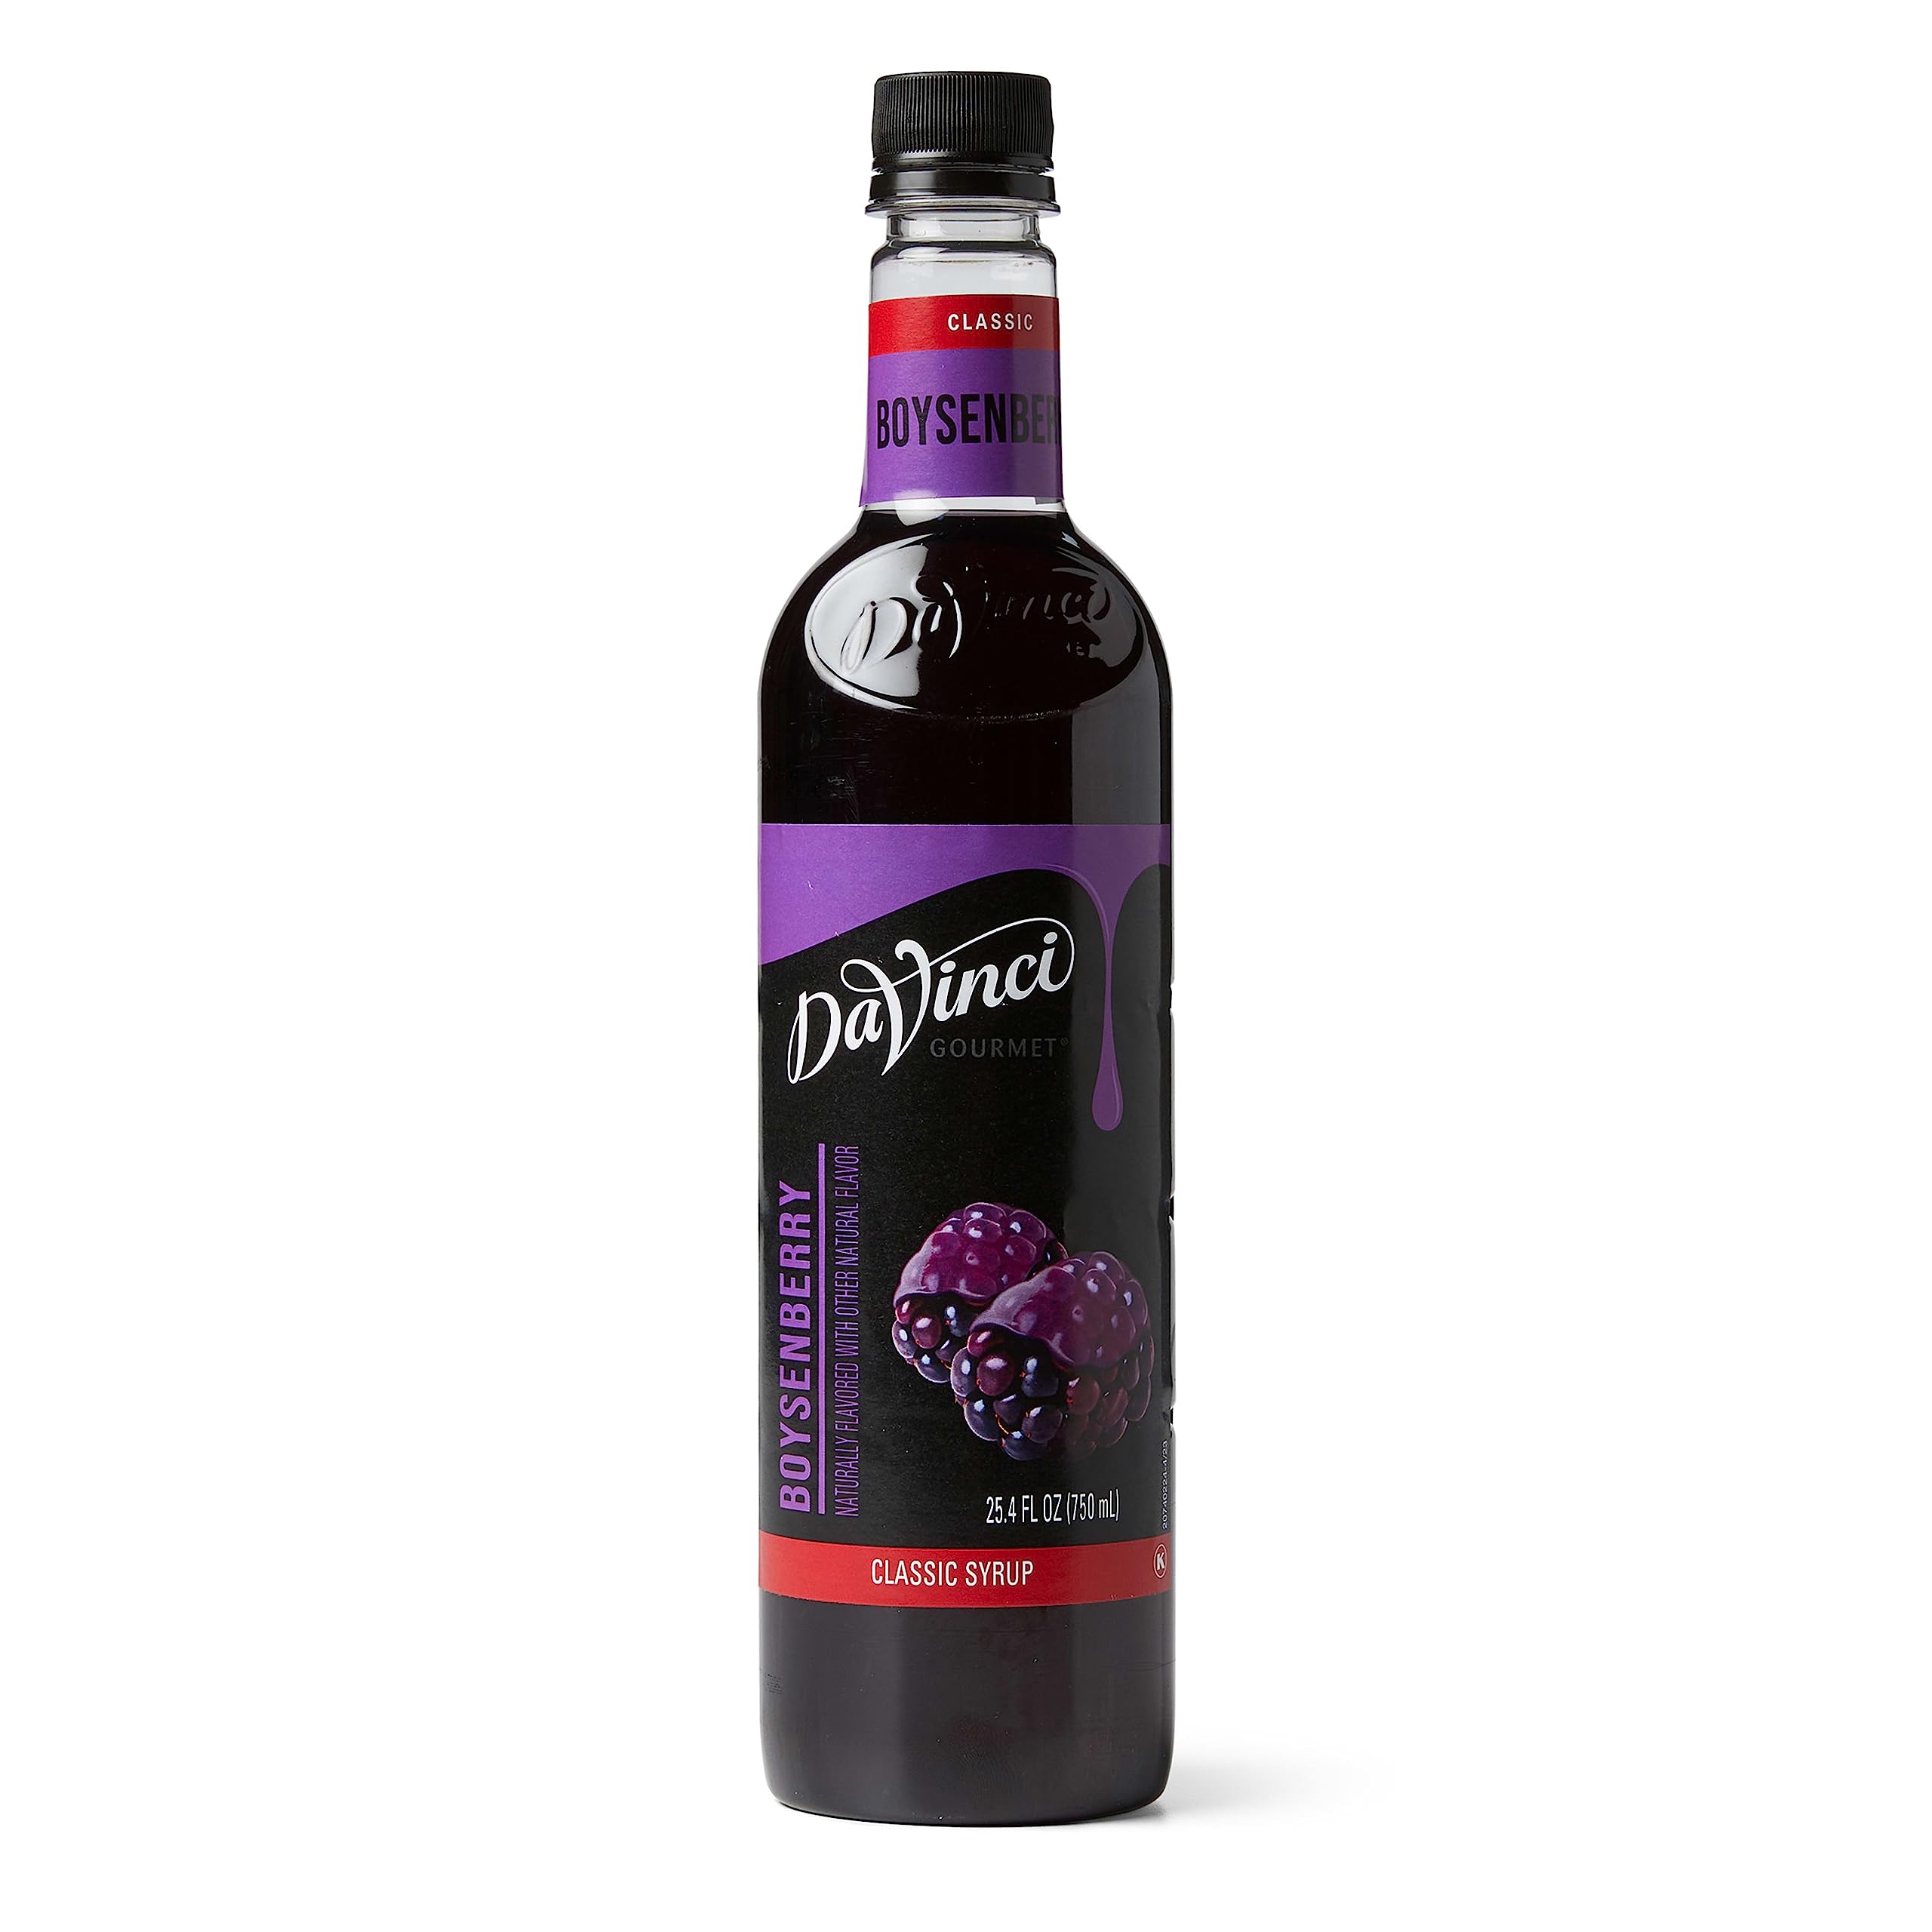 25.4-Oz DaVinci Gourmet Classic Syrup (Boysenberry) $3.85 w/ S&S + Free Shipping w/ Prime or $35+